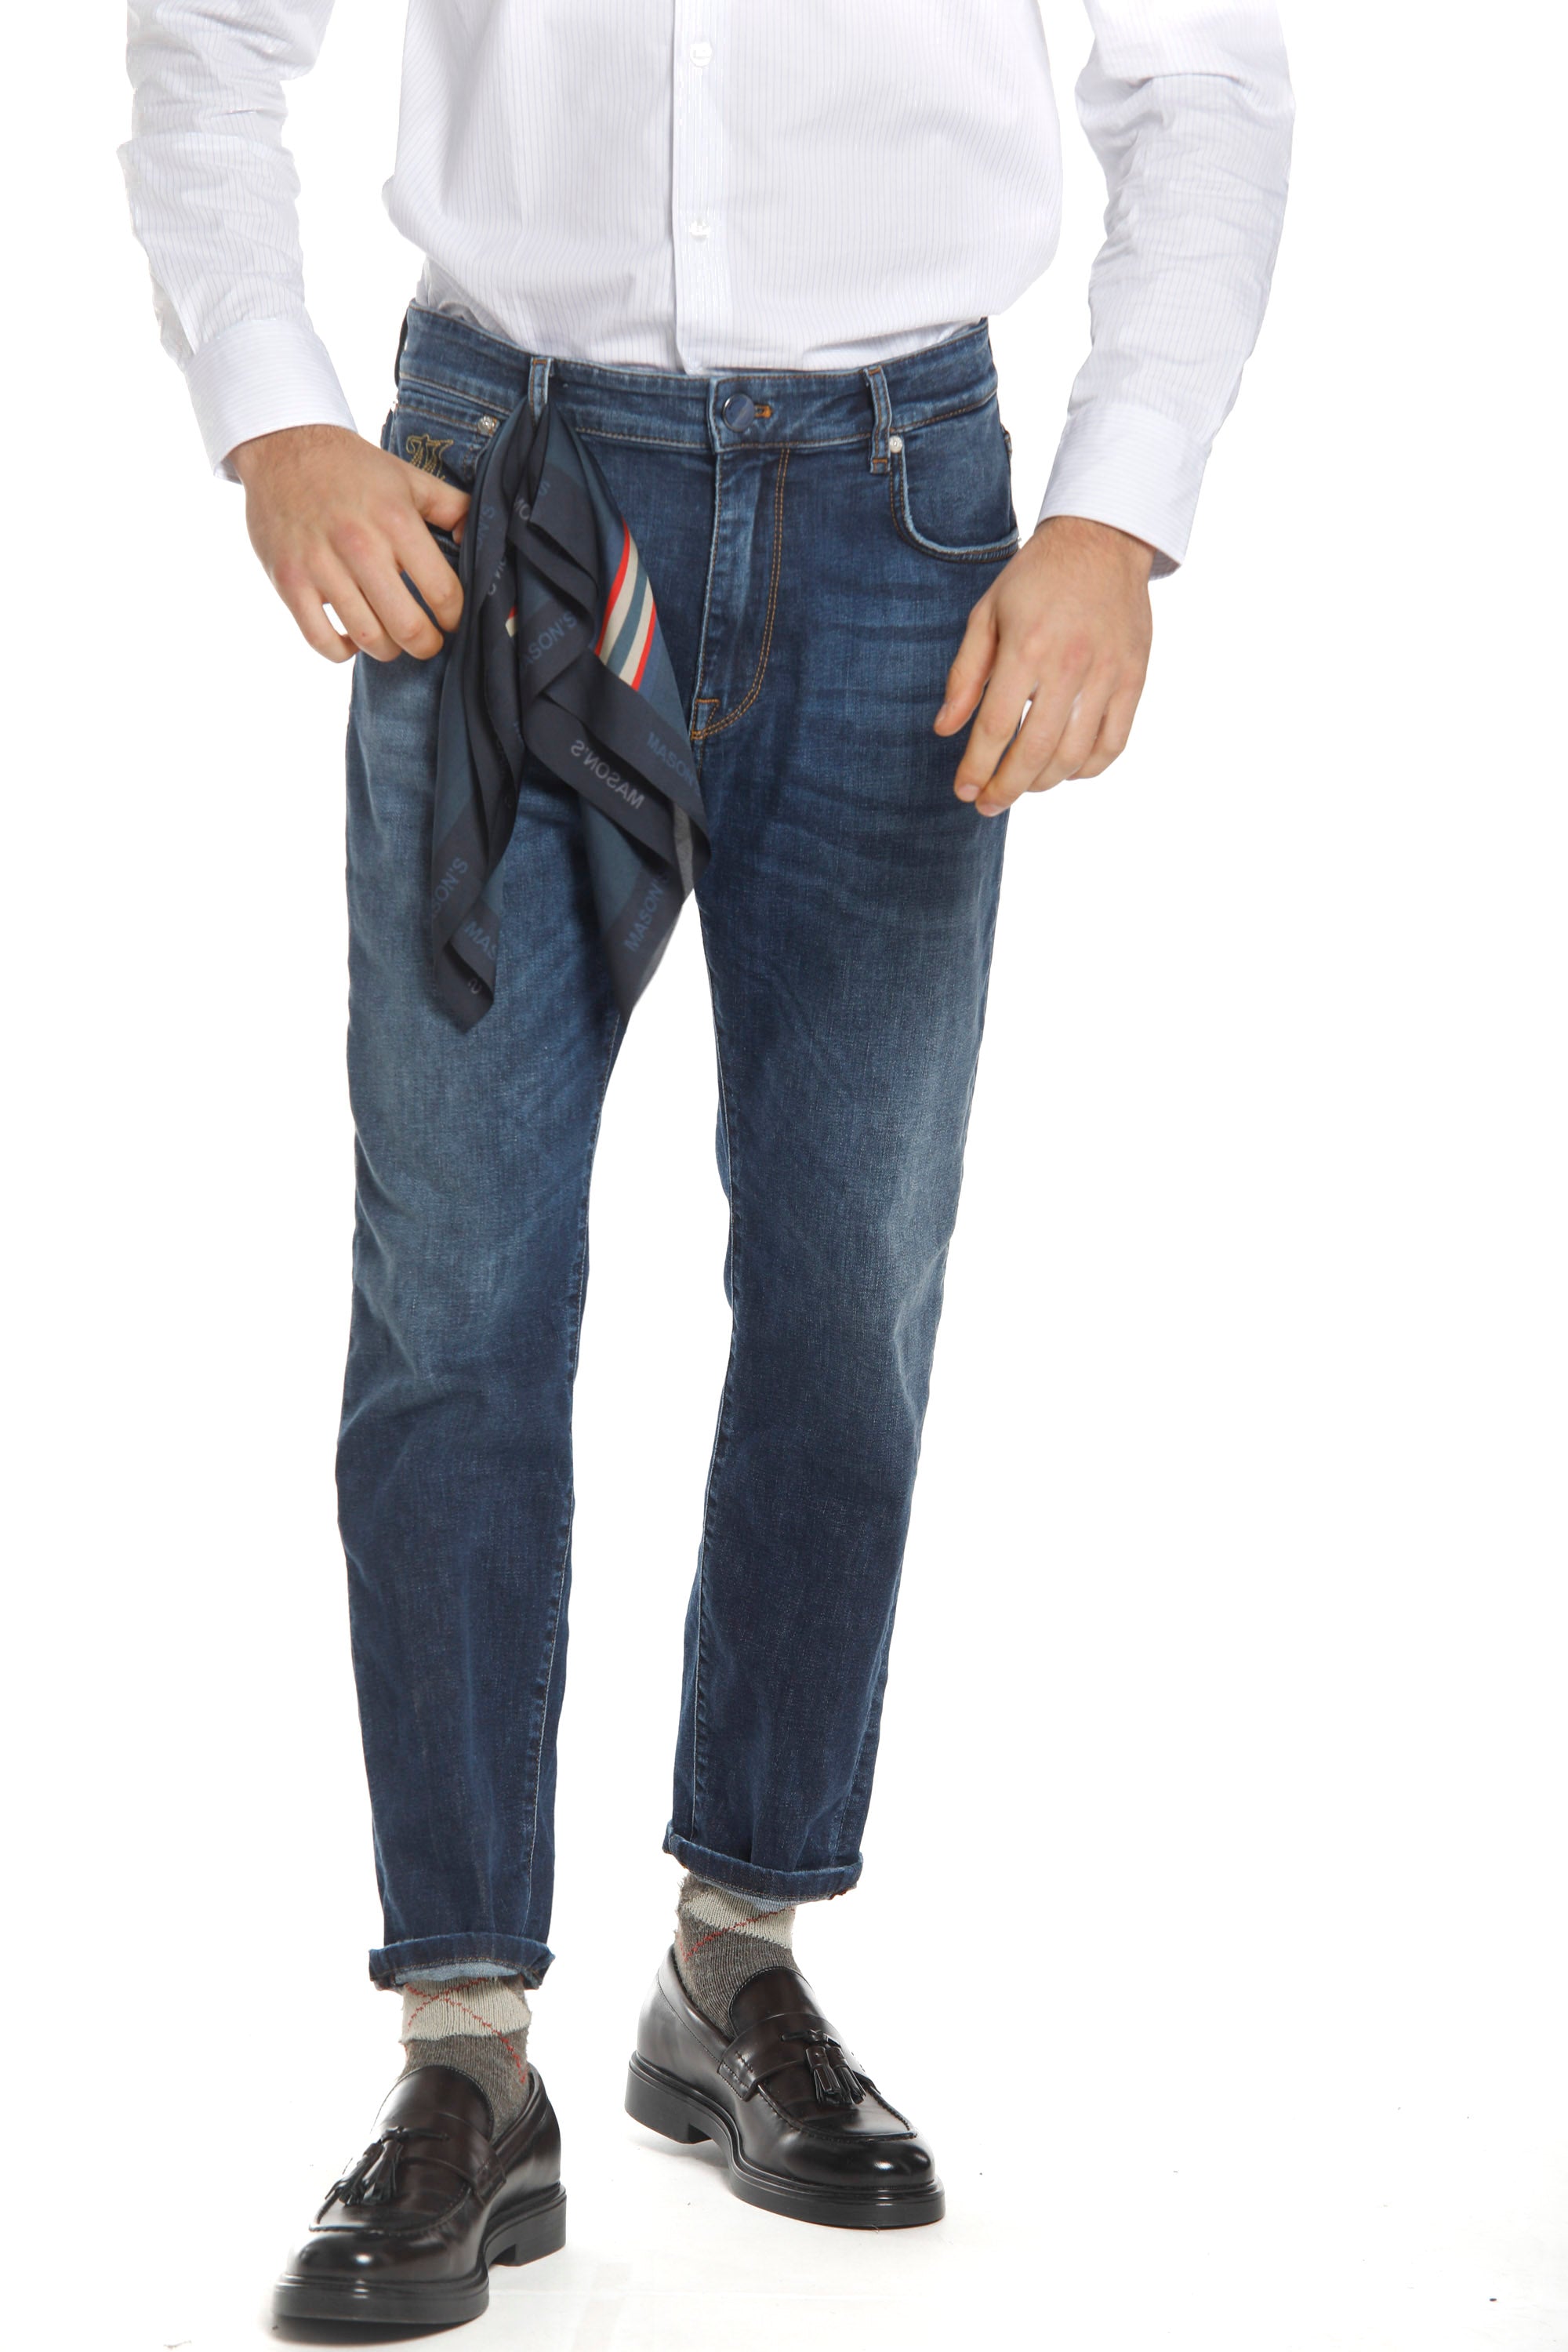 Forte Forte 5 poches Pantalon homme en denim stretch bleu coupe carrot